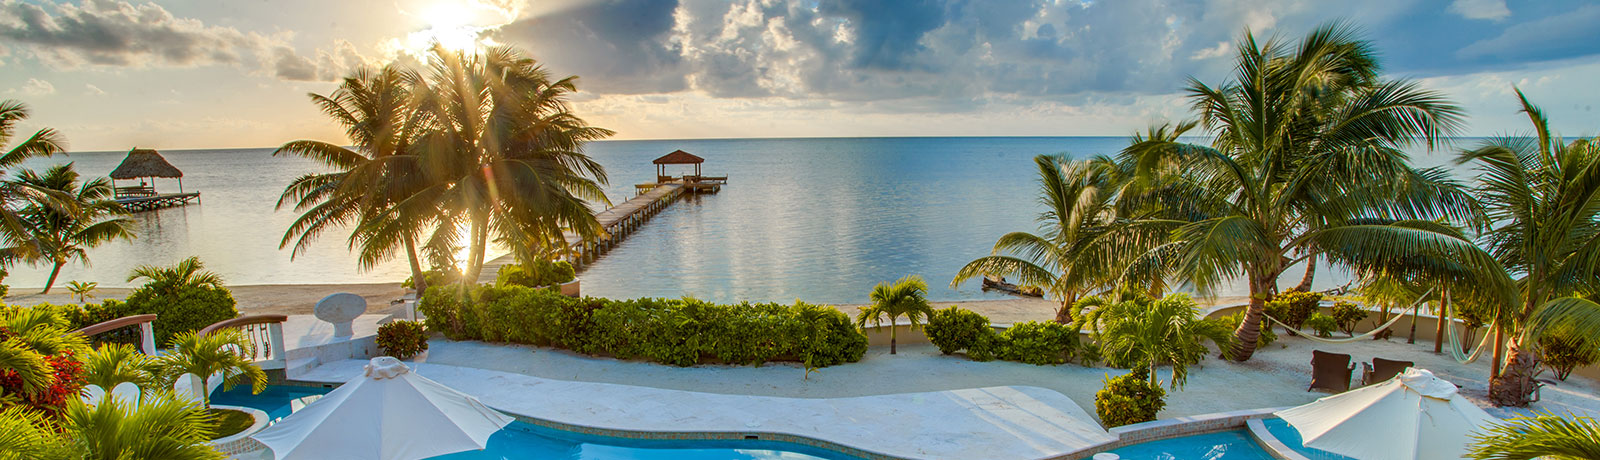 Luxury Beachfront Vacation Rental in Belize